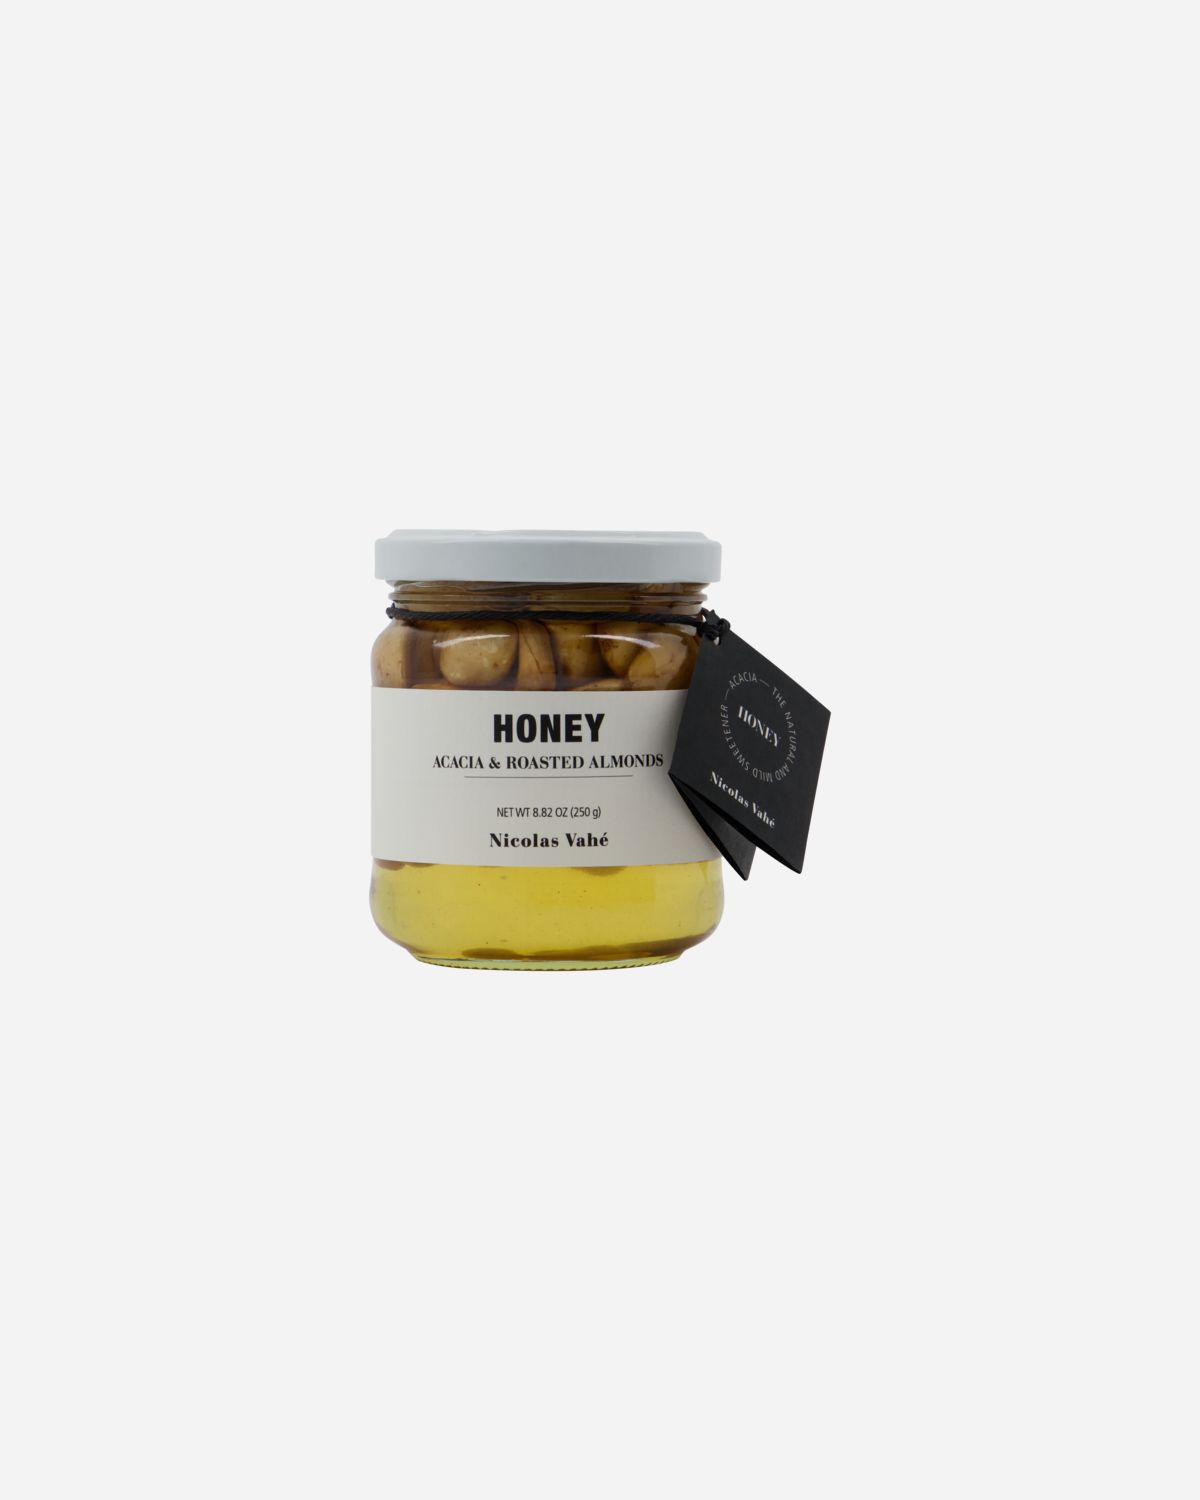 Honey, Acacia & Roasted Almo